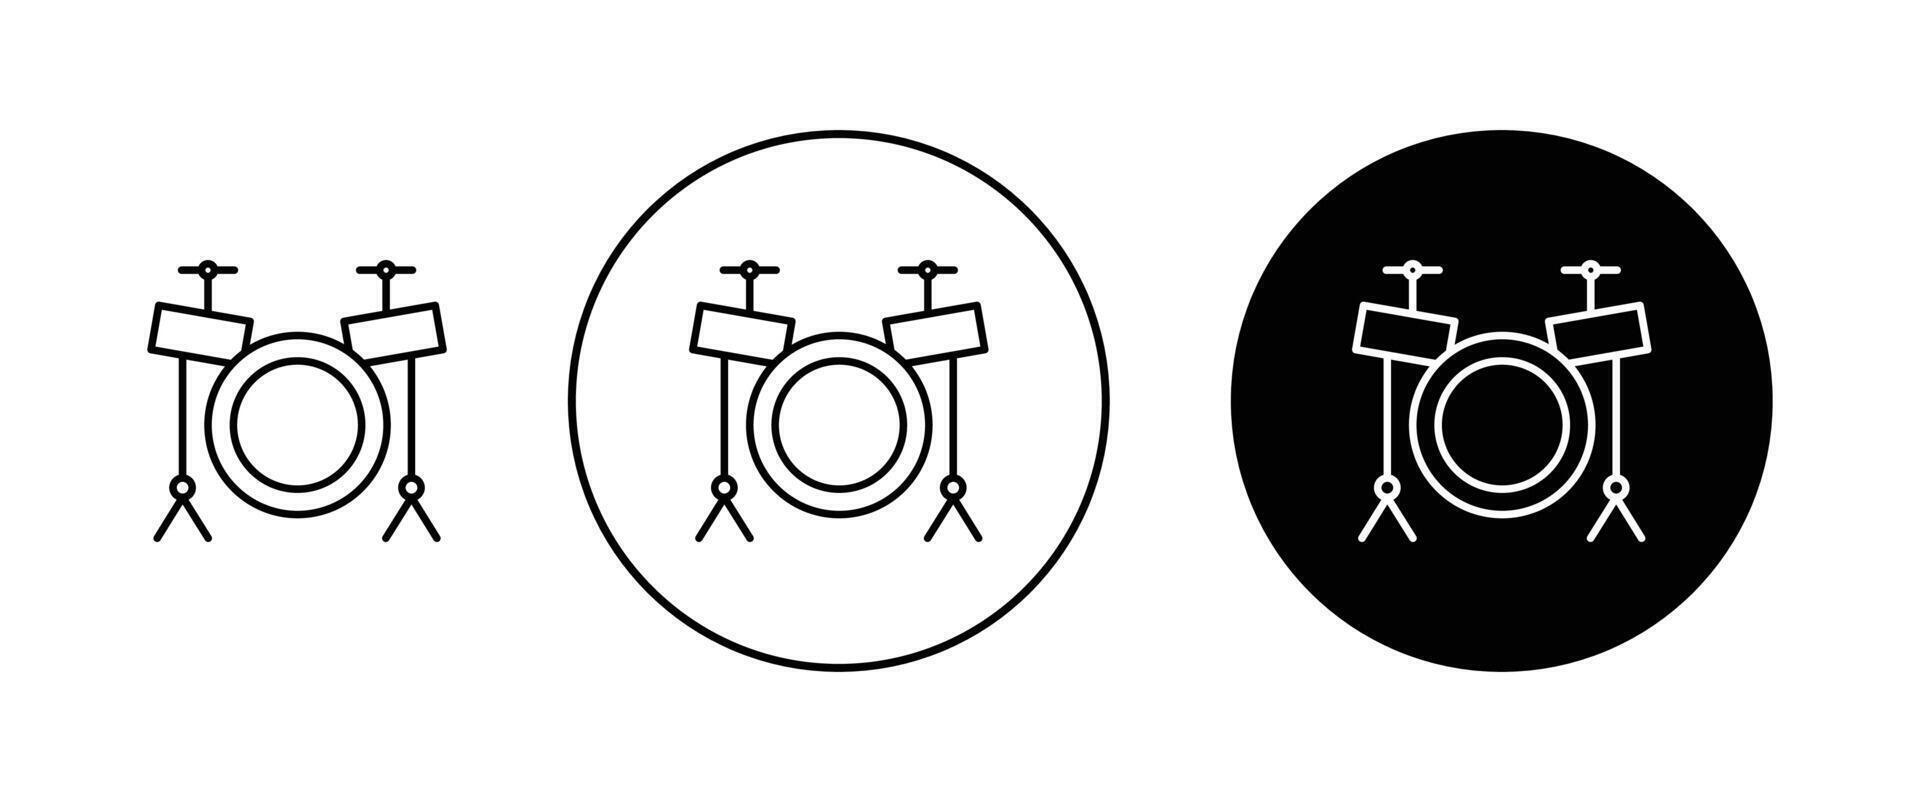 Drum set icon vector